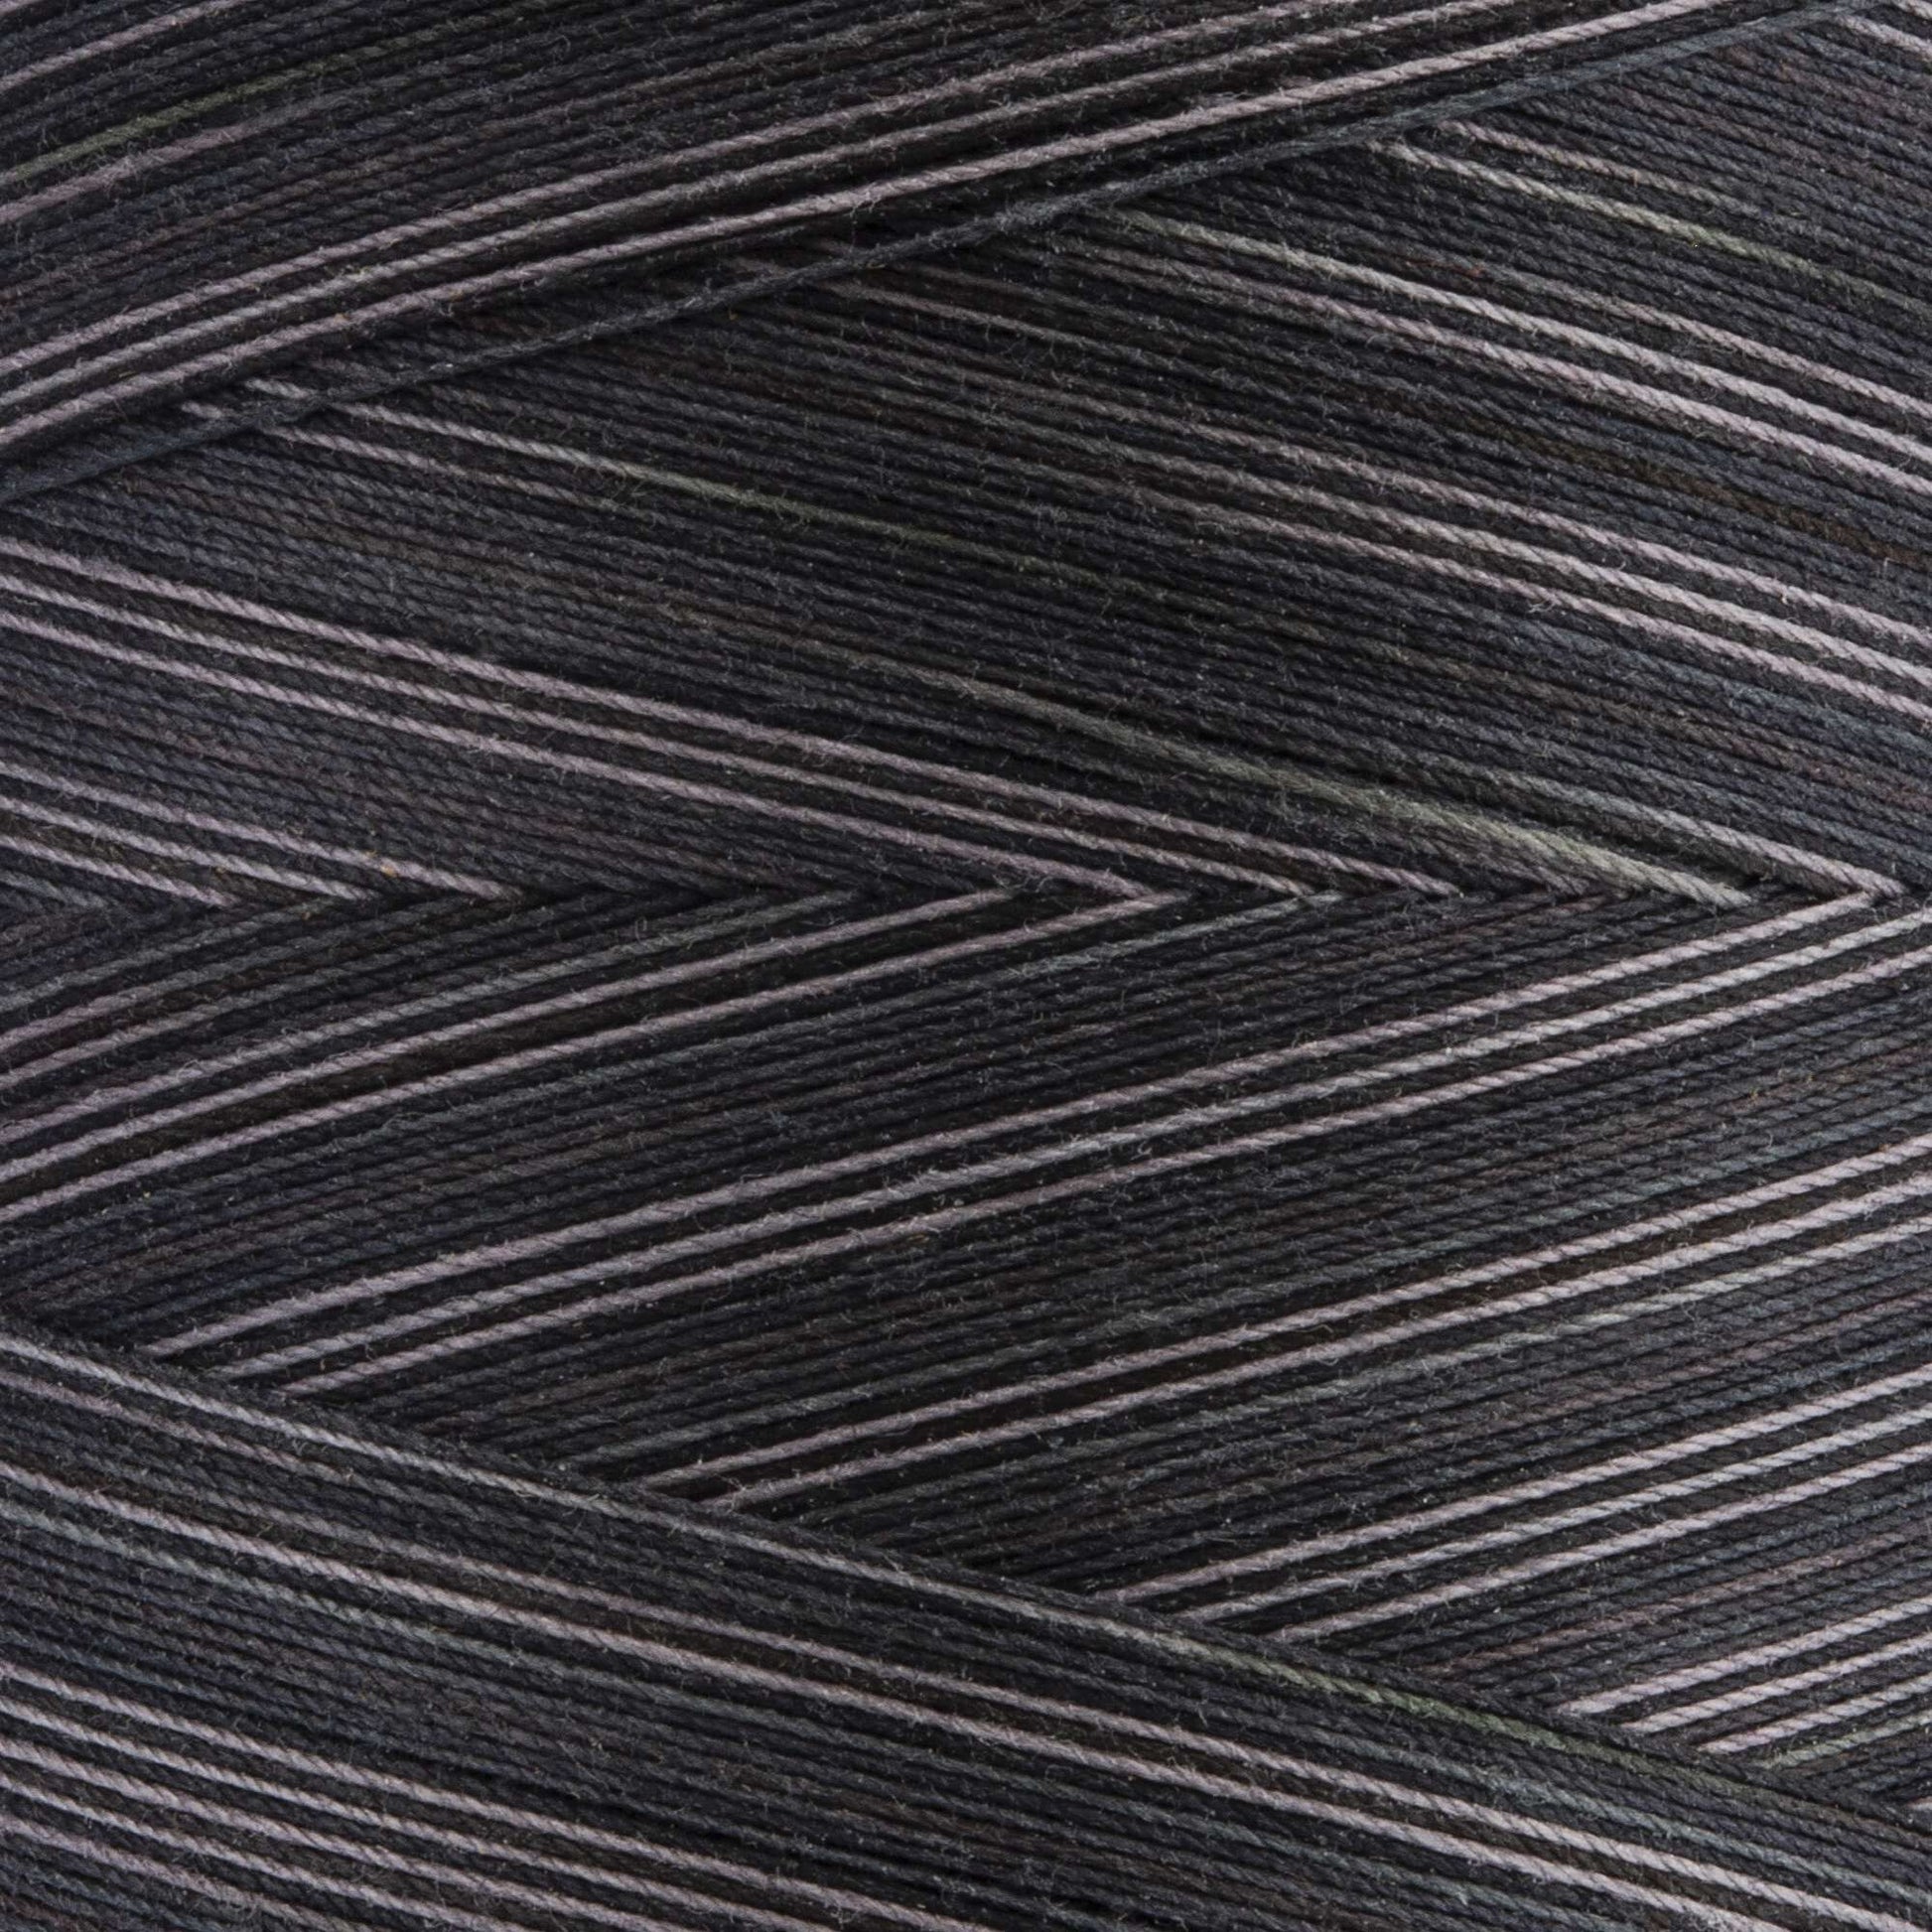 Coats & Clark Cotton Machine Quilting Multicolor Thread (1200 Yards) Black Pinstripes